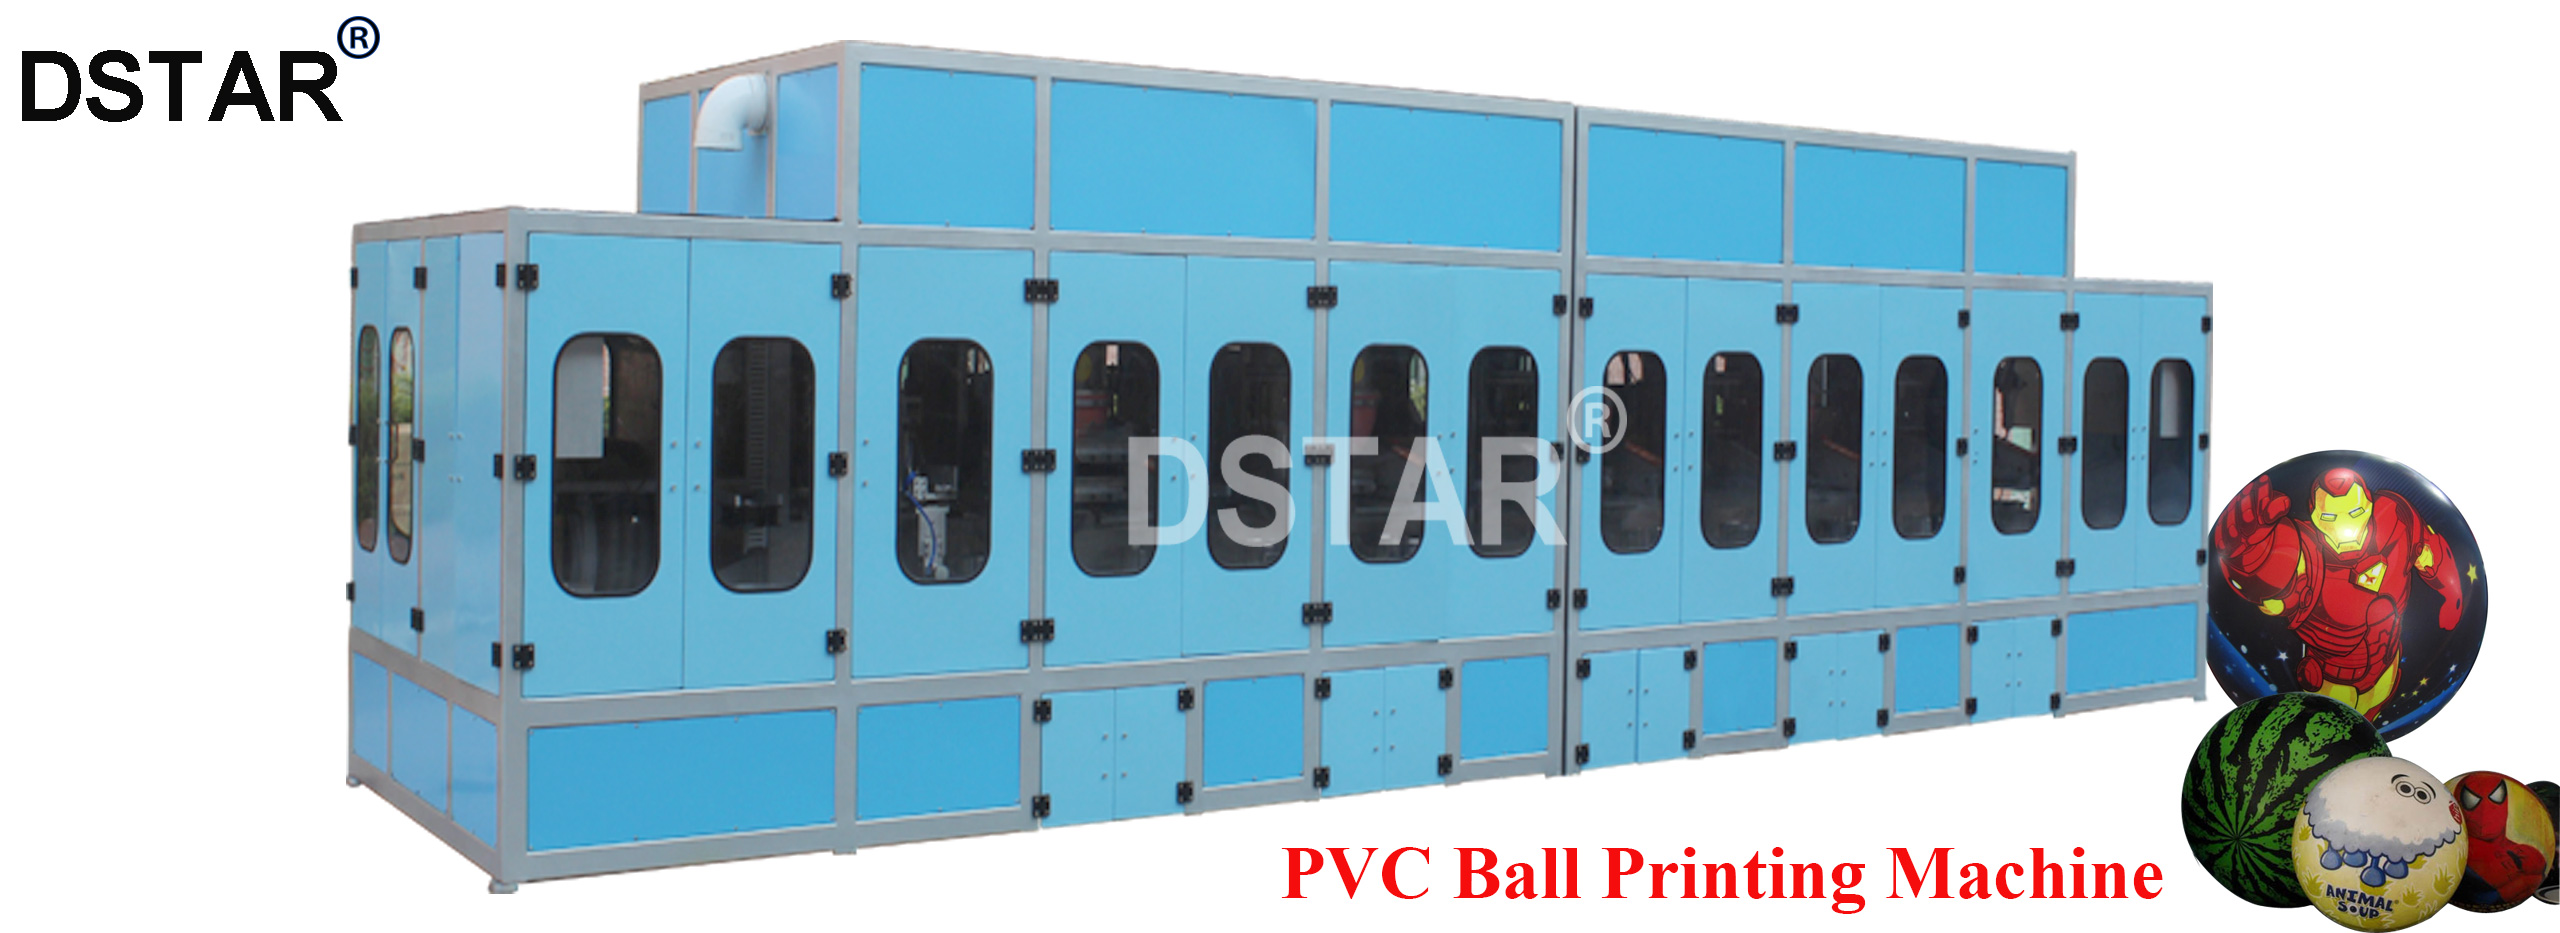 PVC ball printing machine